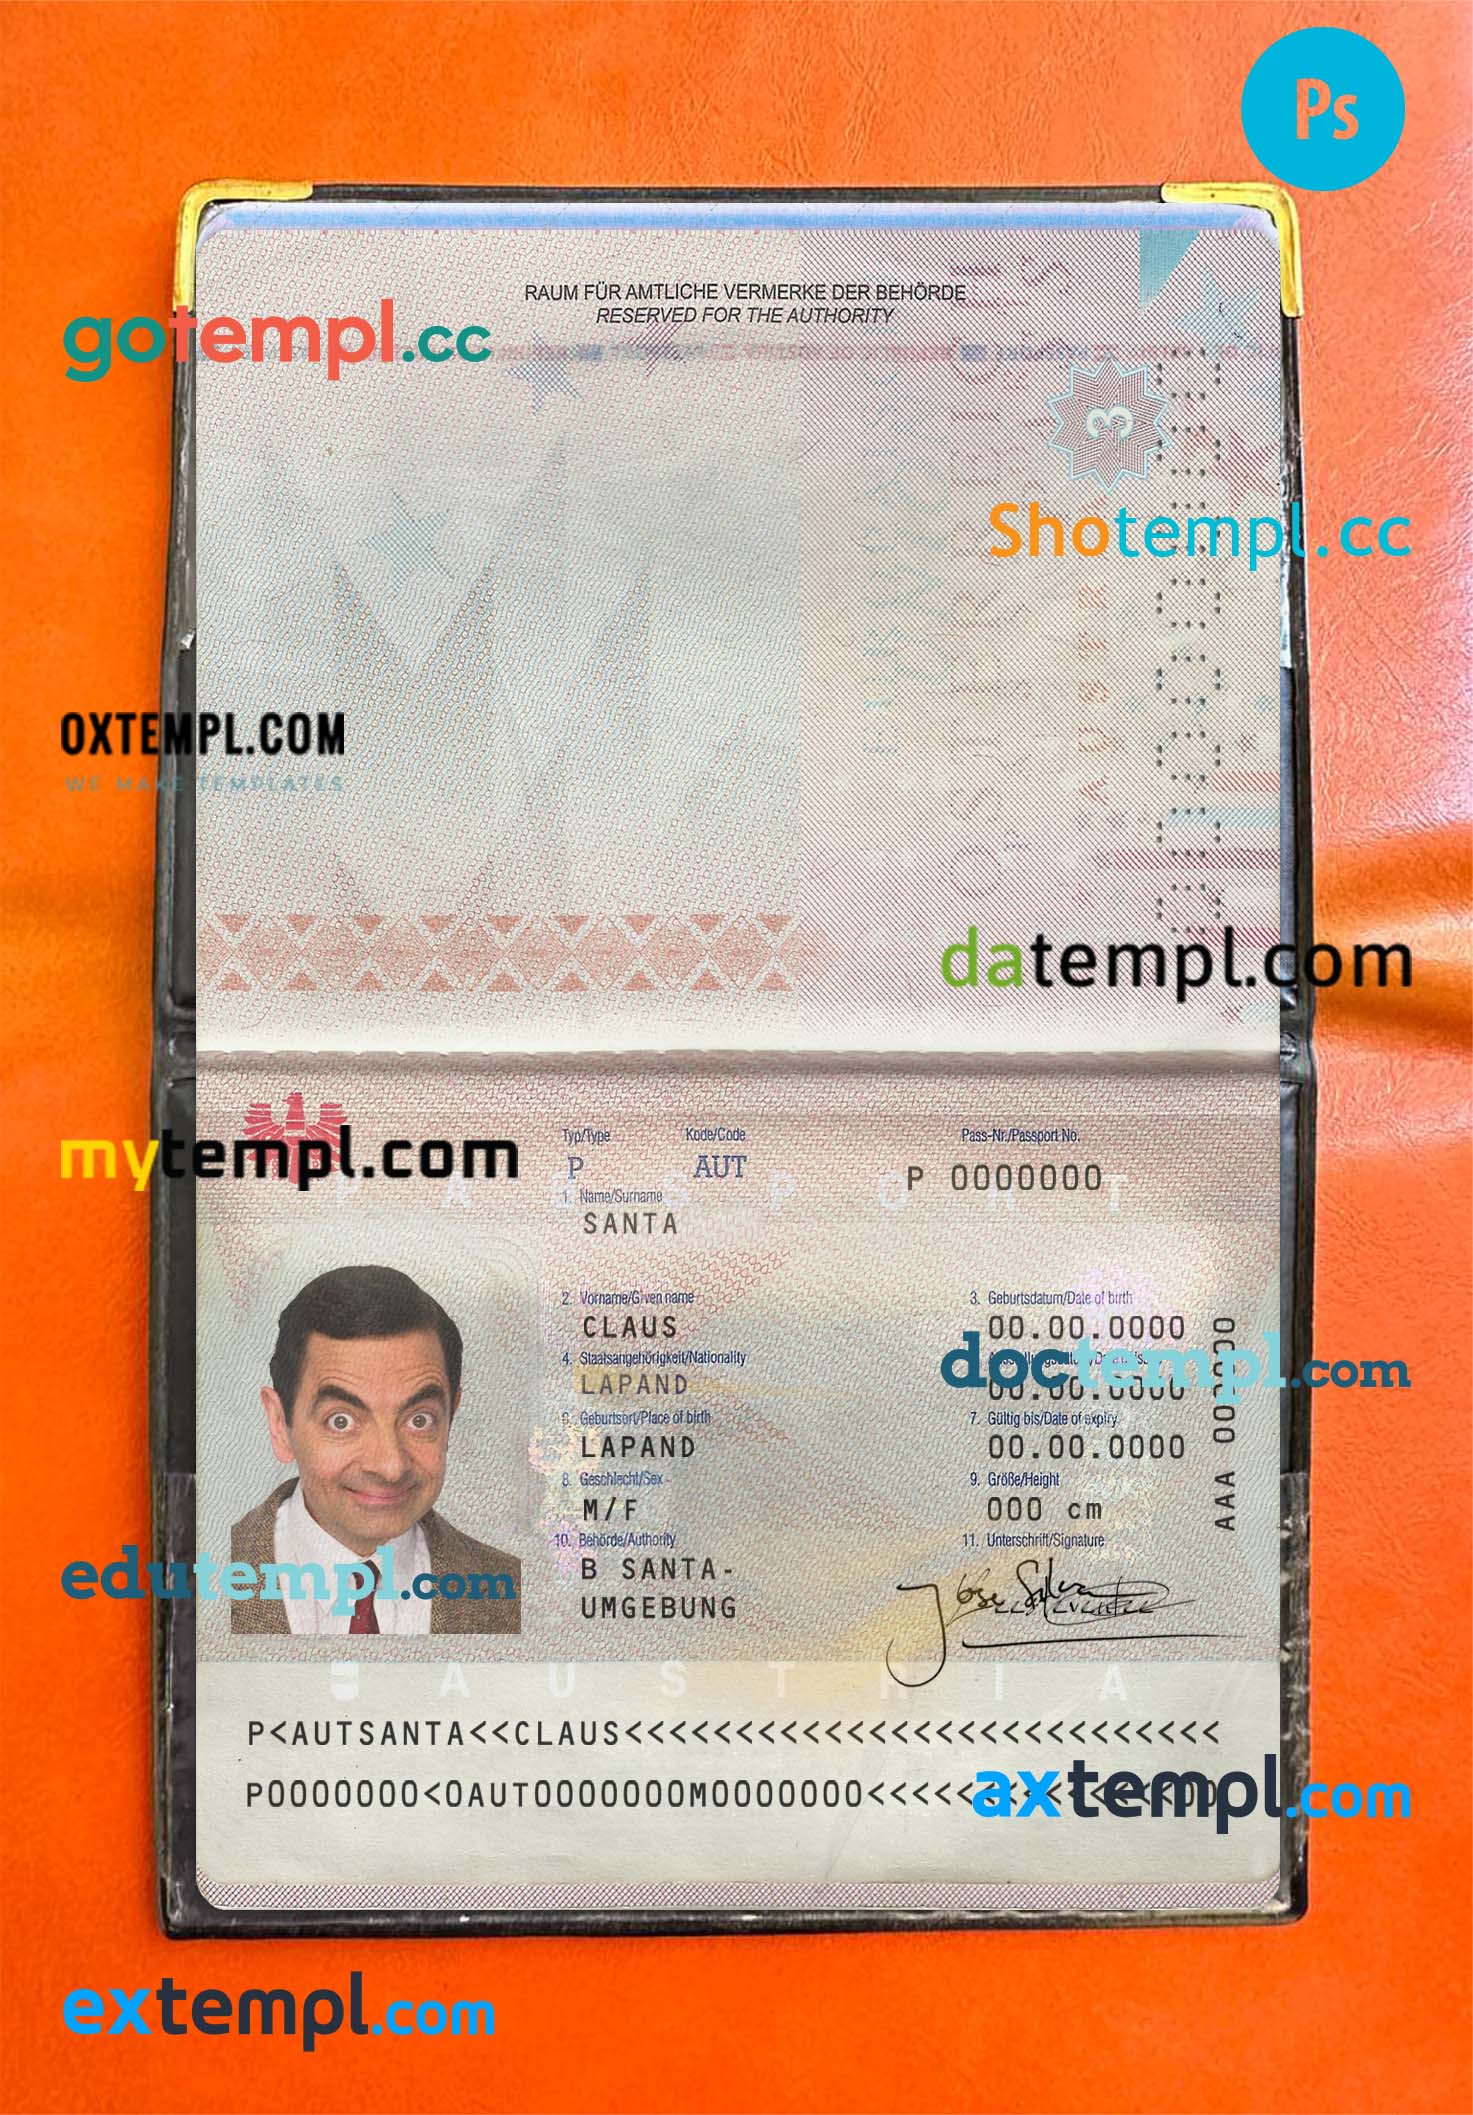 Egypt Al Ahli Bank of Kuwait visa signature card template in PSD format, fully editable